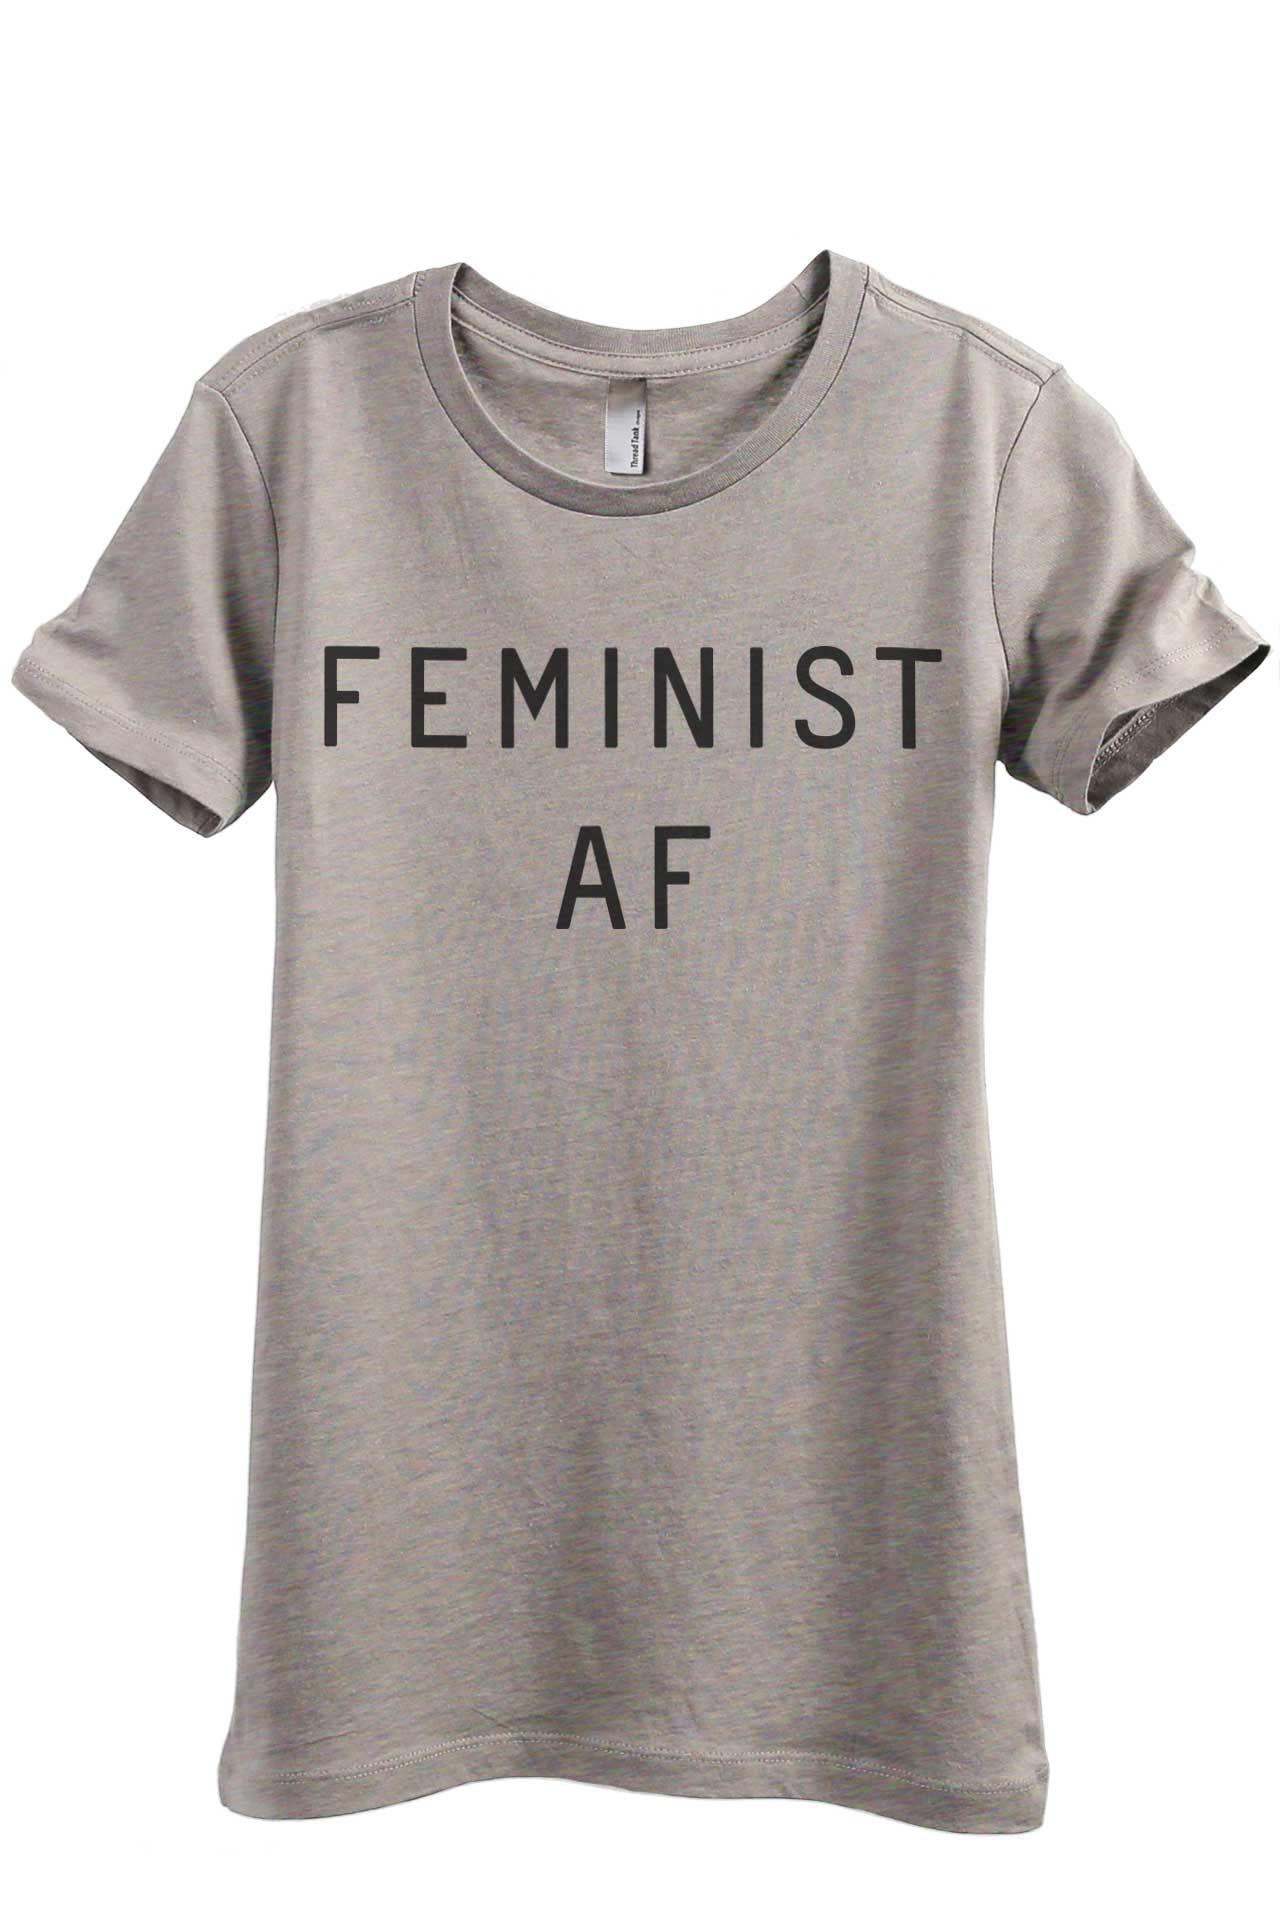 Thread Tank Feminist AF Women's Fashion Relaxed Crewneck T-Shirt Tee ...